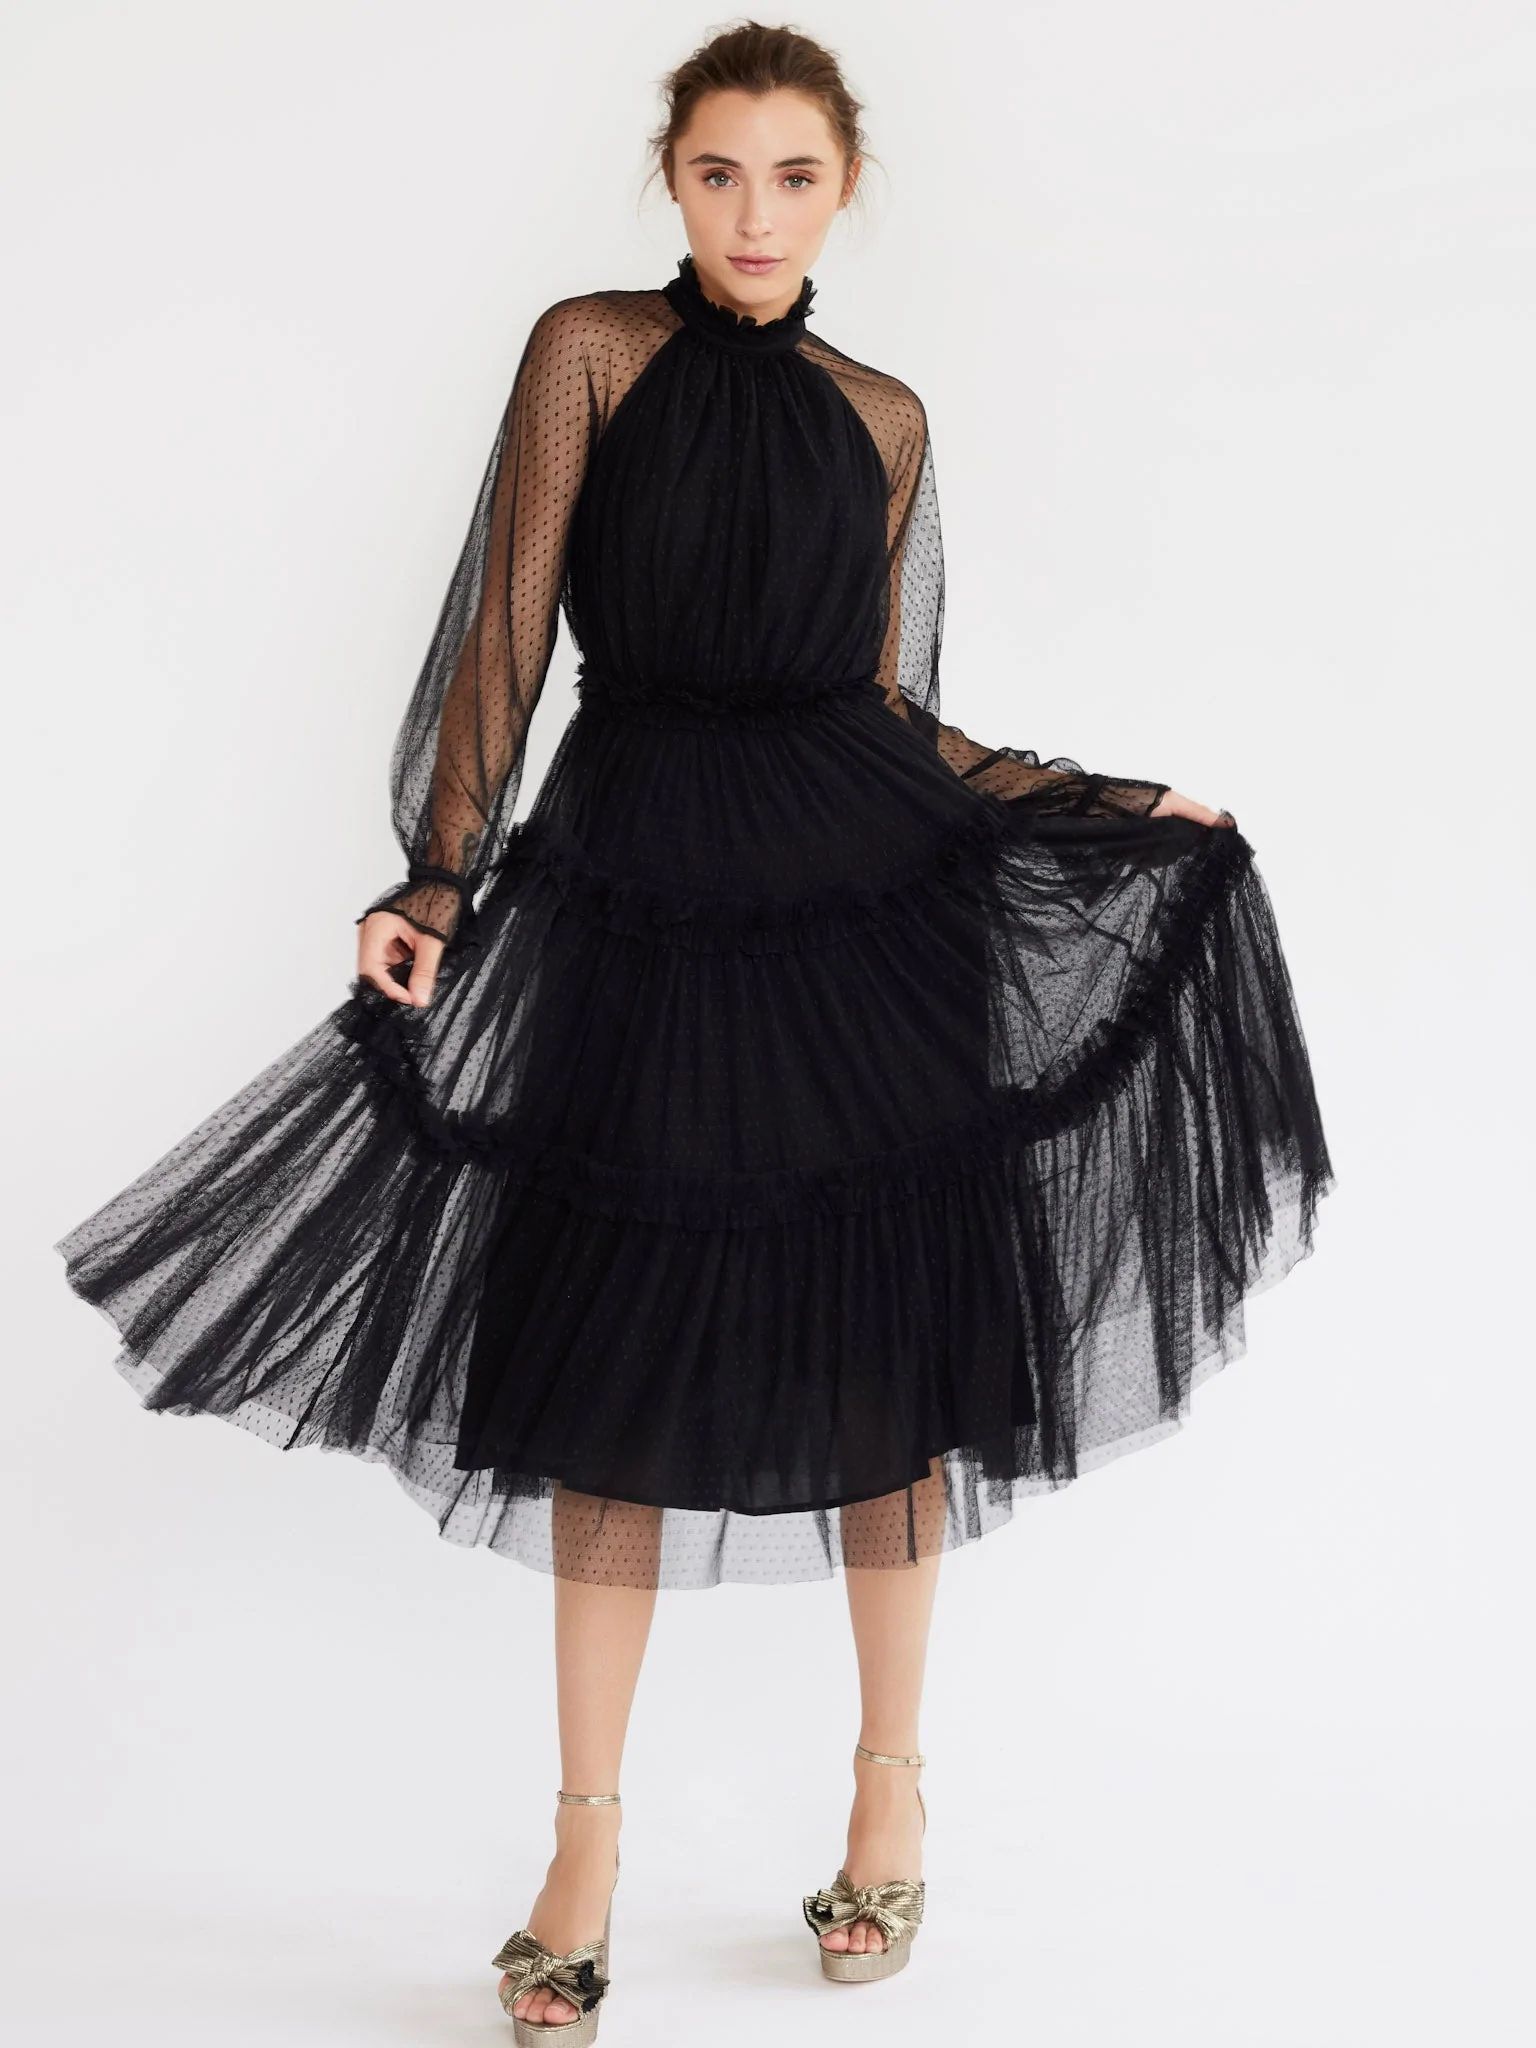 Shop Mille - Gabrielle Dress in Black Tulle | Mille